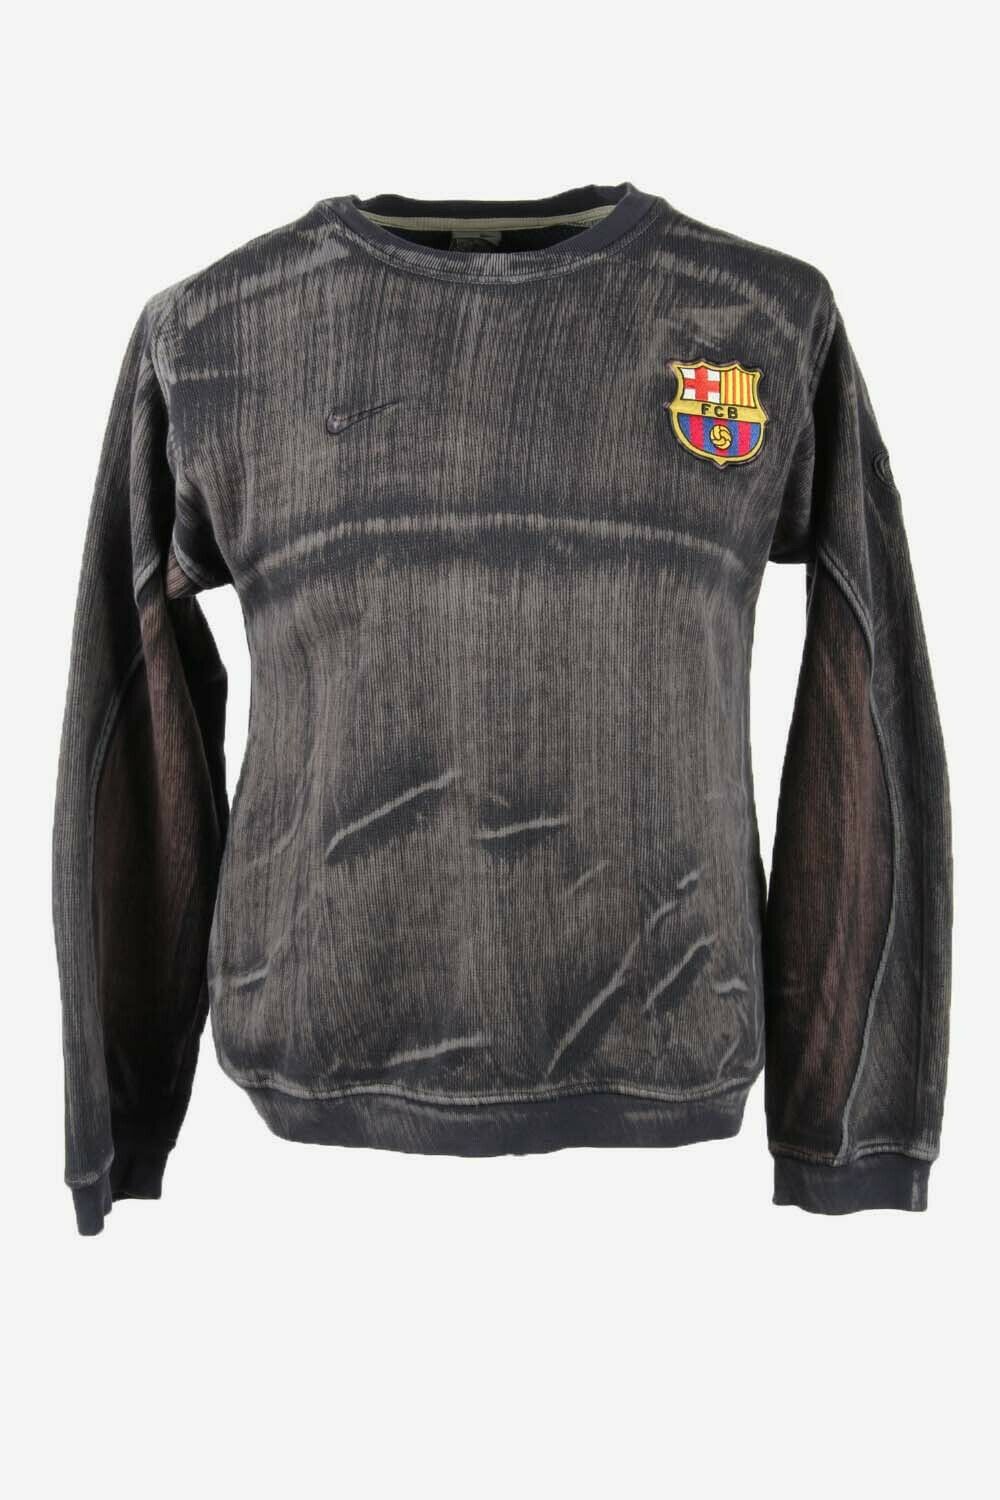 vintage fc barcelona sweatshirt